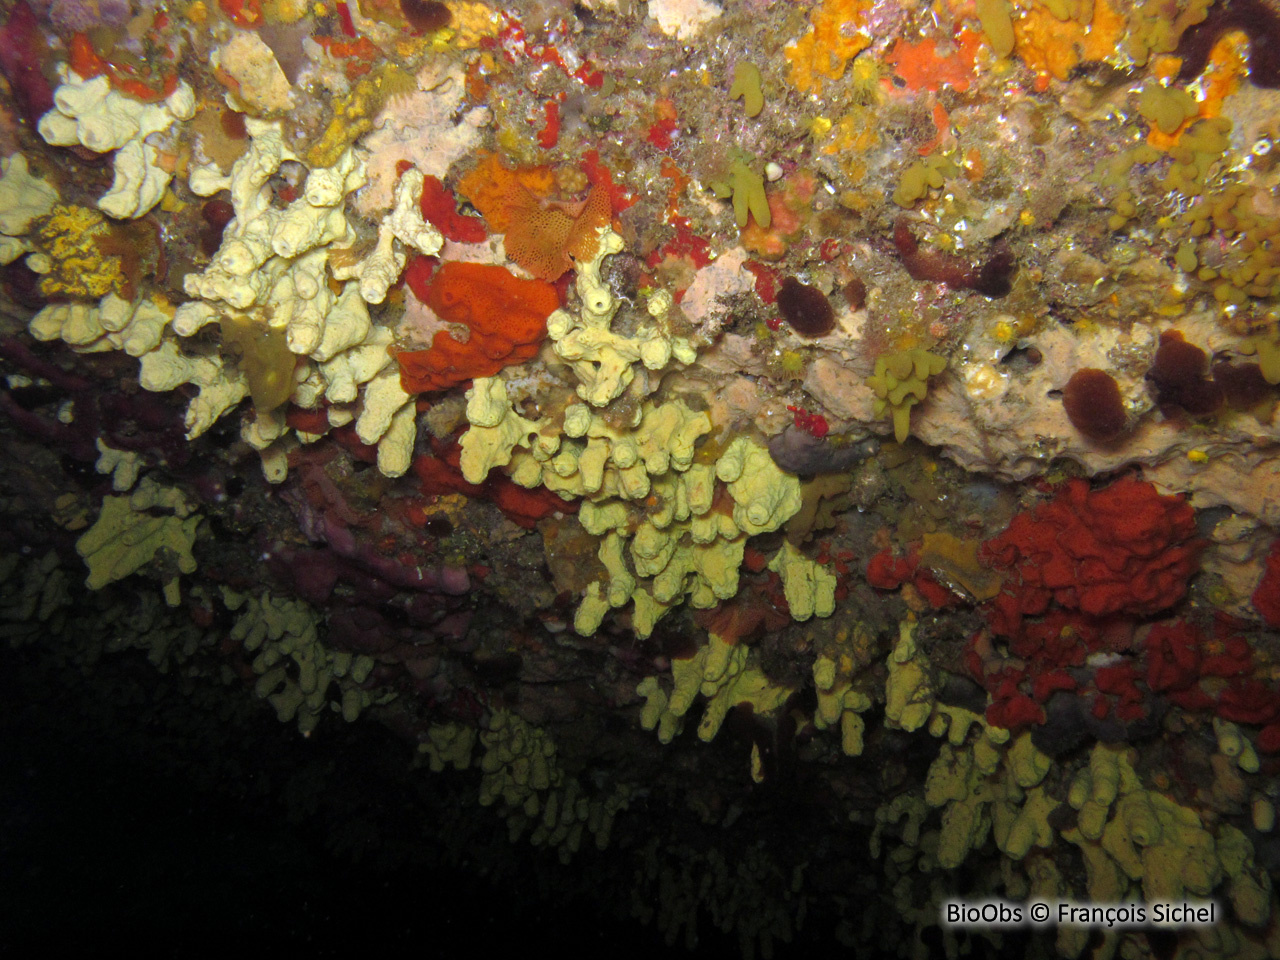 Eponge cavernicole jaune - Aplysina cavernicola - François Sichel - BioObs